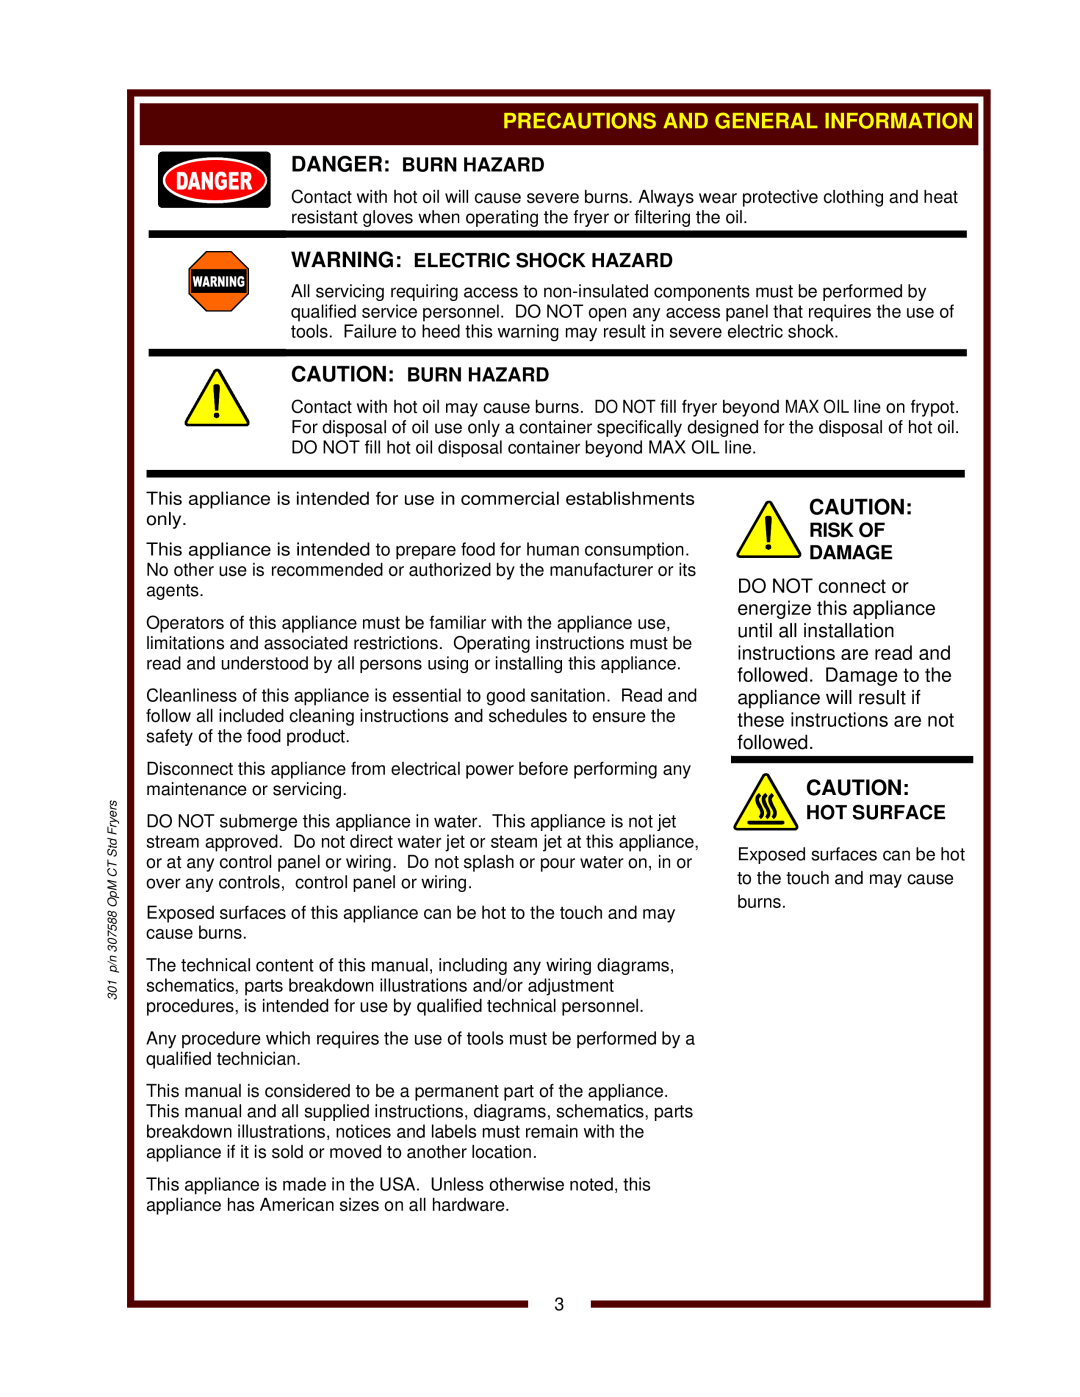 Wells F-14 Precautions And General Information, Danger Burn Hazard, Warning Electric Shock Hazard, Caution Burn Hazard 